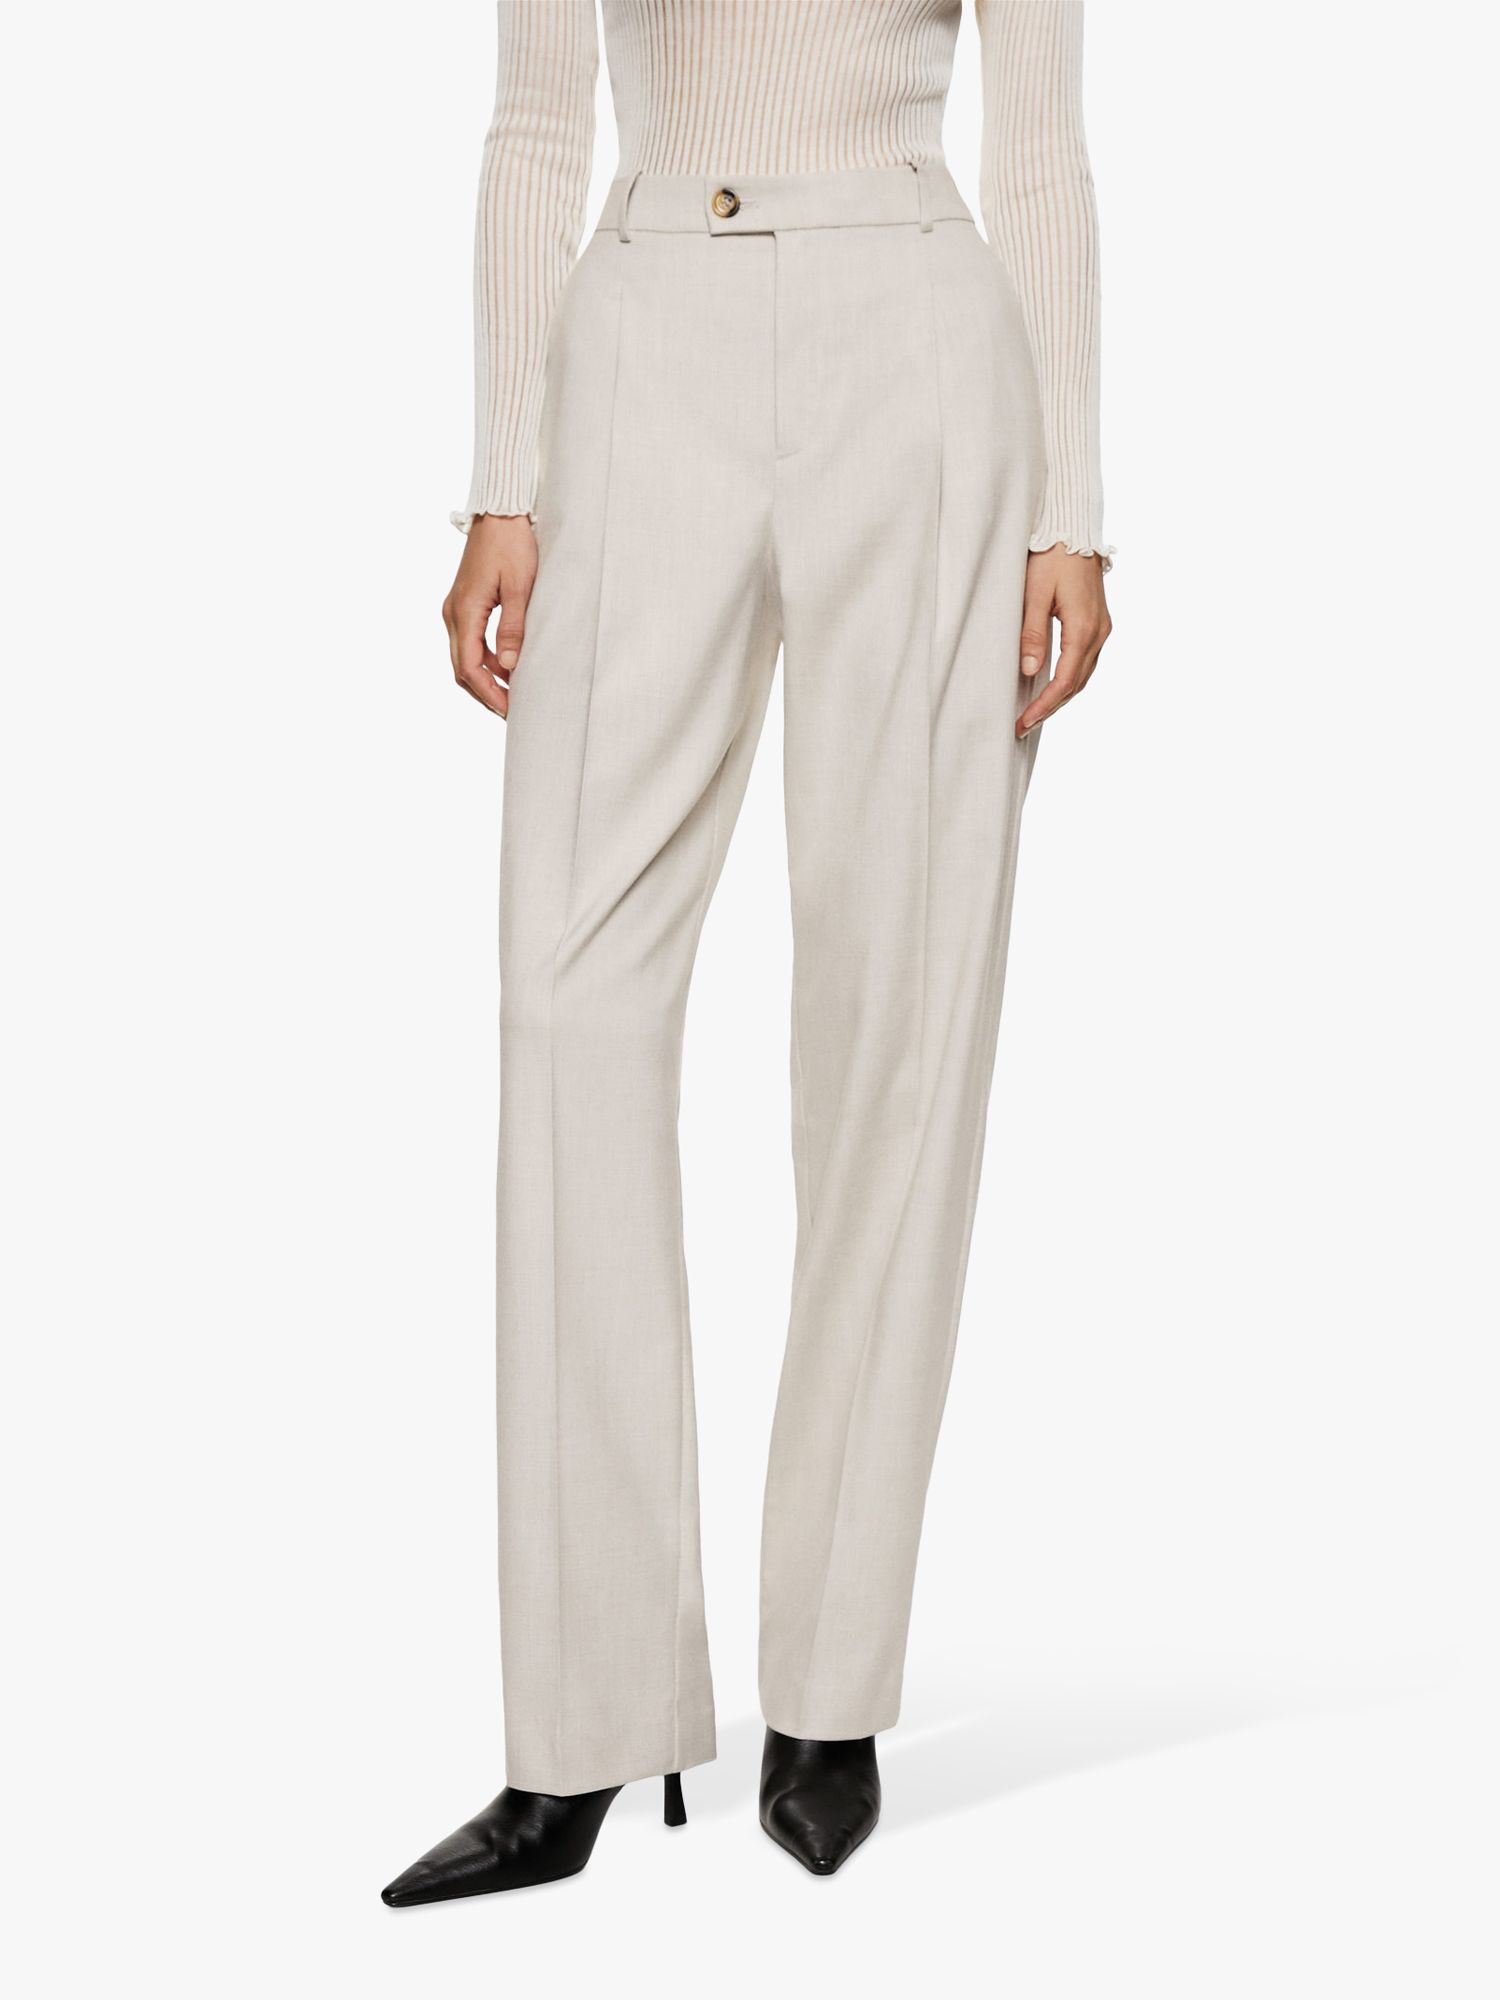 Mango Duo Tailored Trousers, White, 4